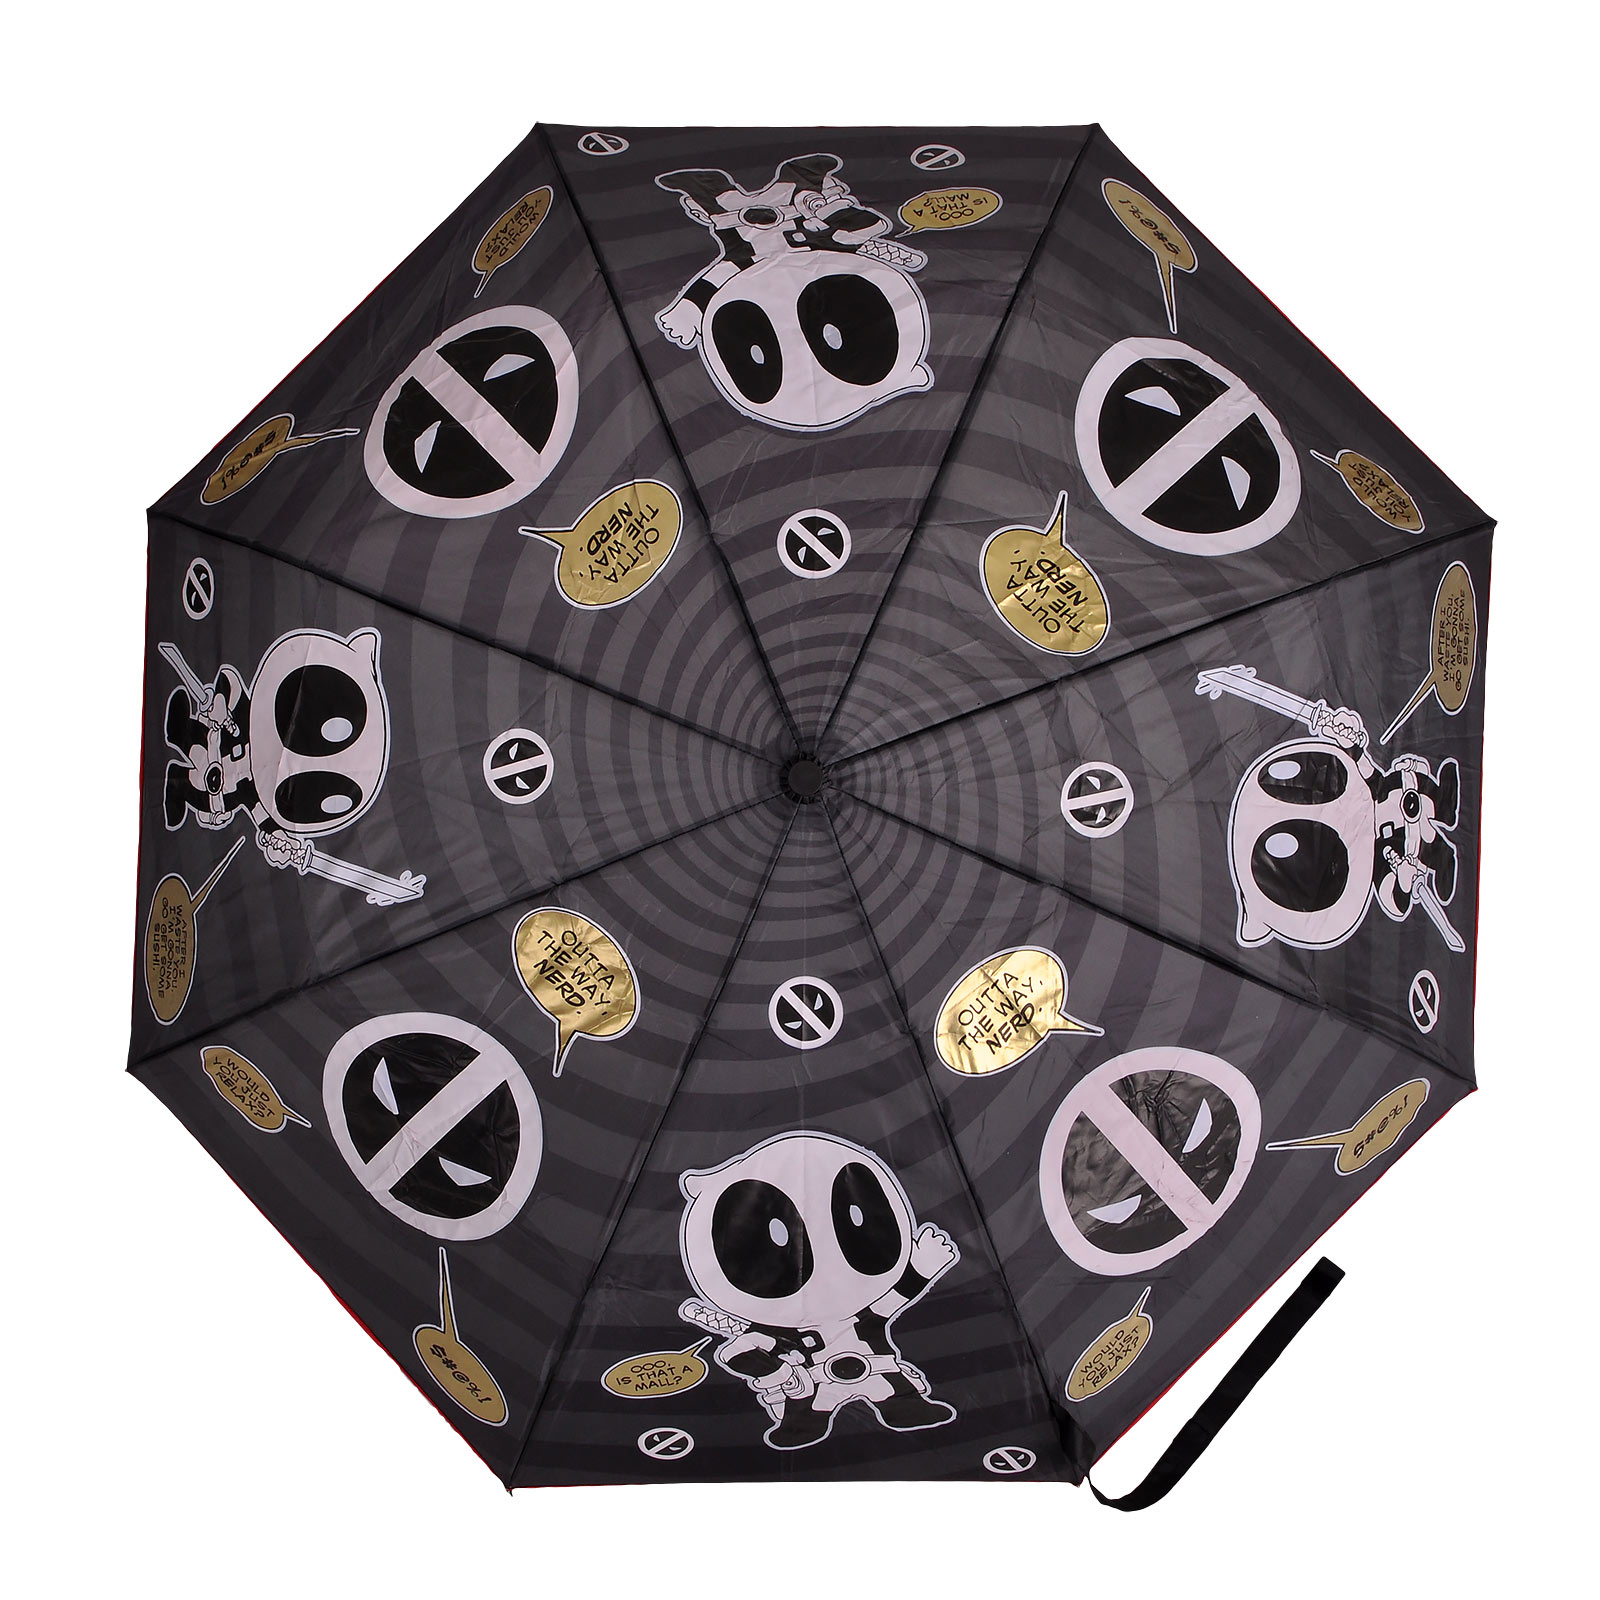 Deadpool - Chibi Umbrella with Aqua Effect